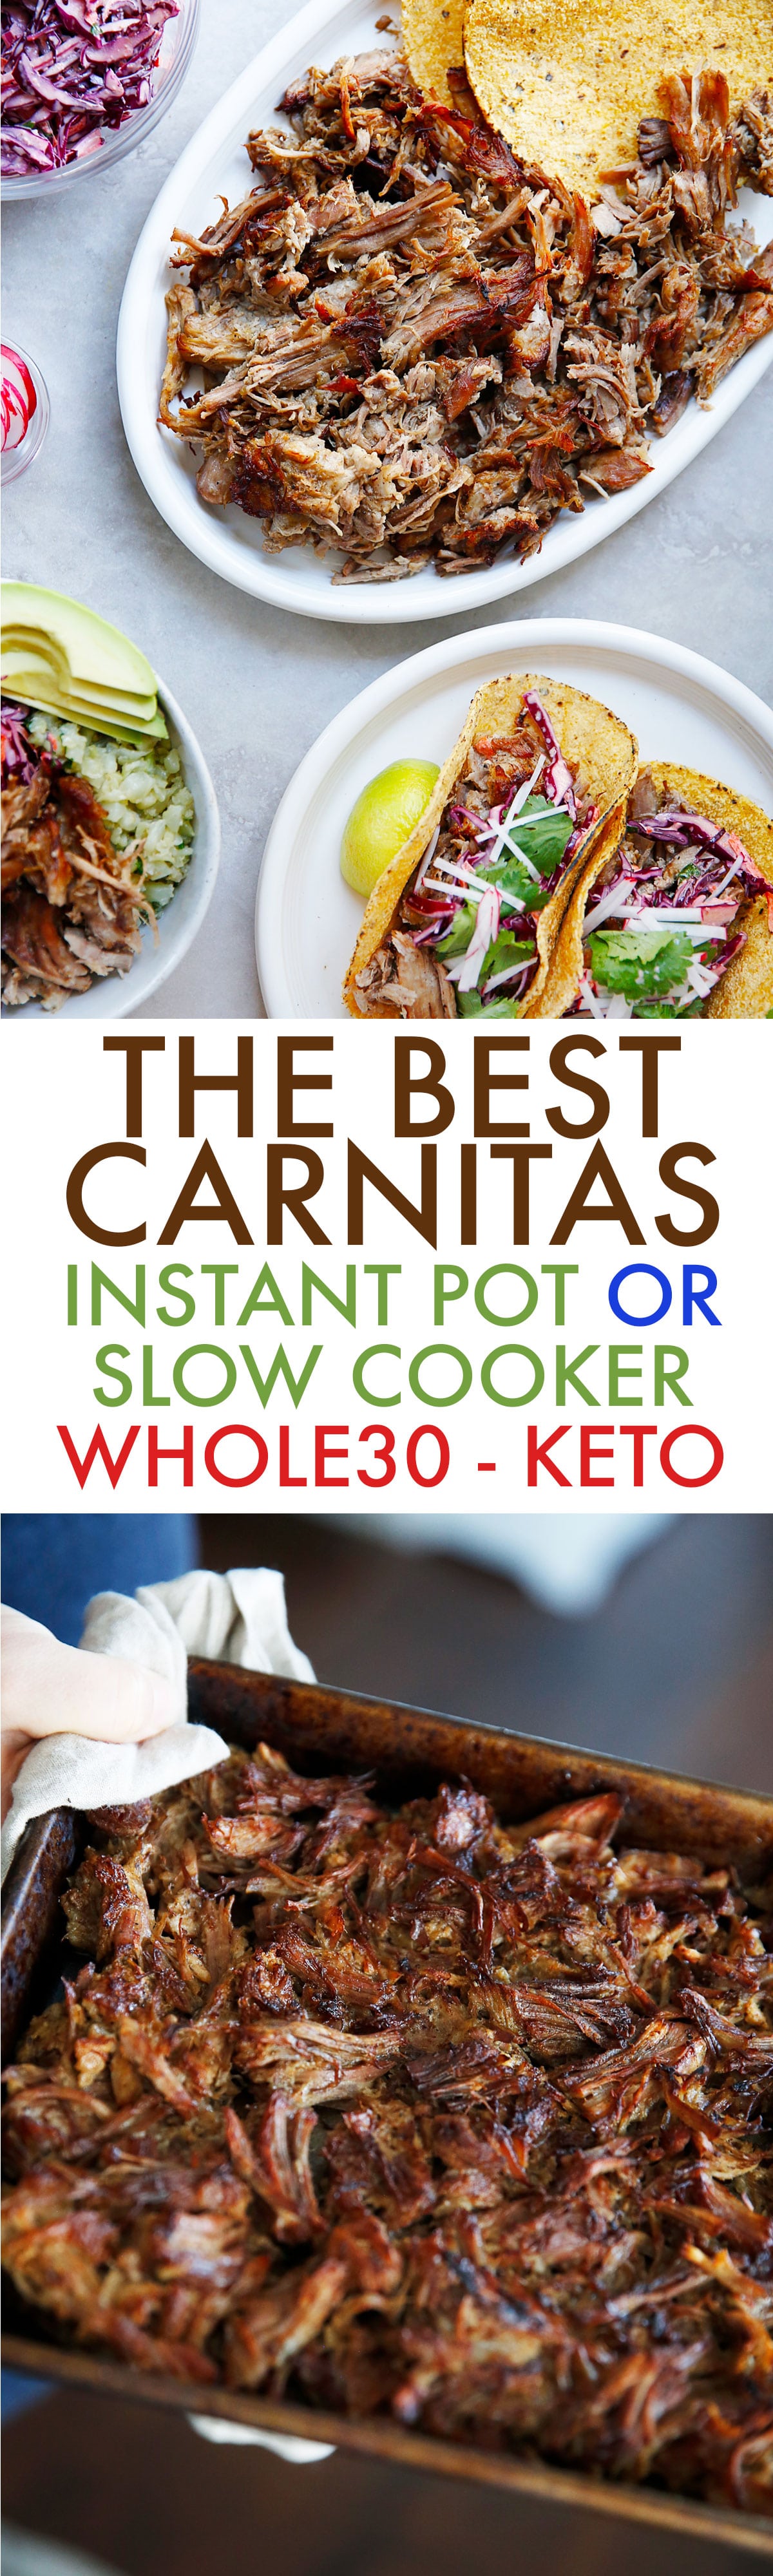 Instant Pot or Slow Cooker Carnitas